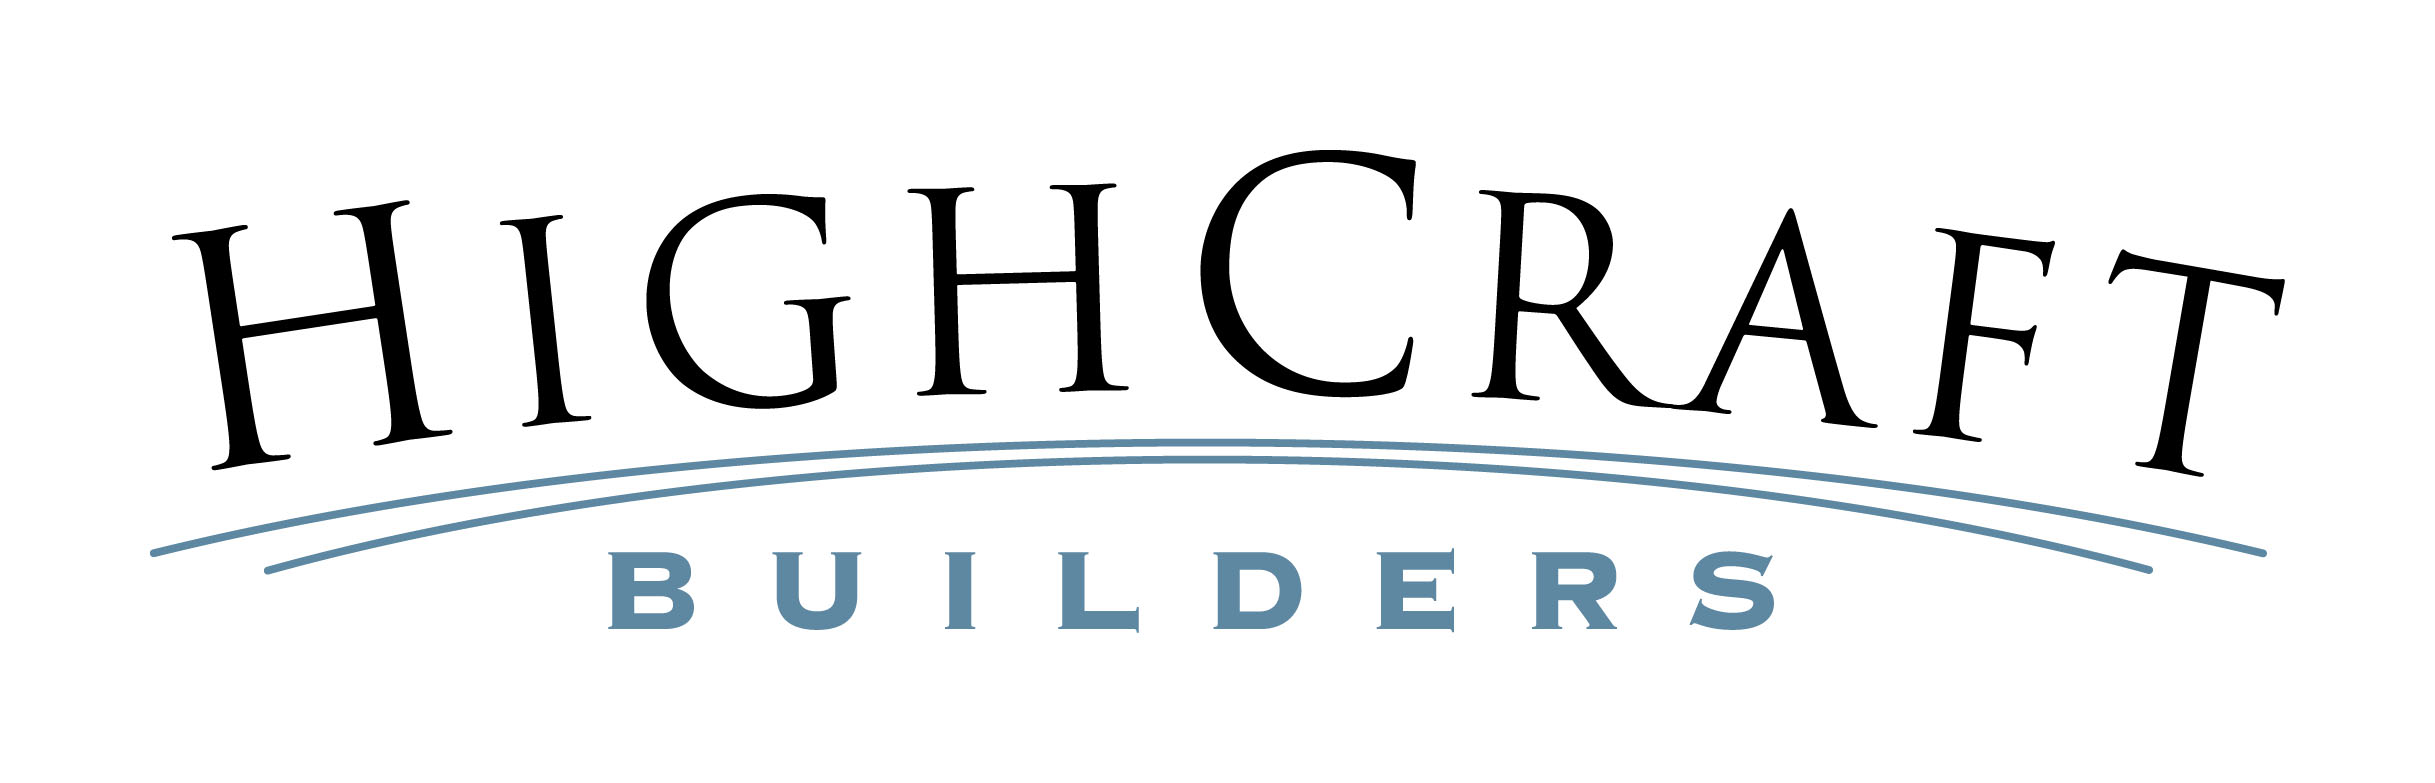 HighCraft Builder logo FINAL RGB